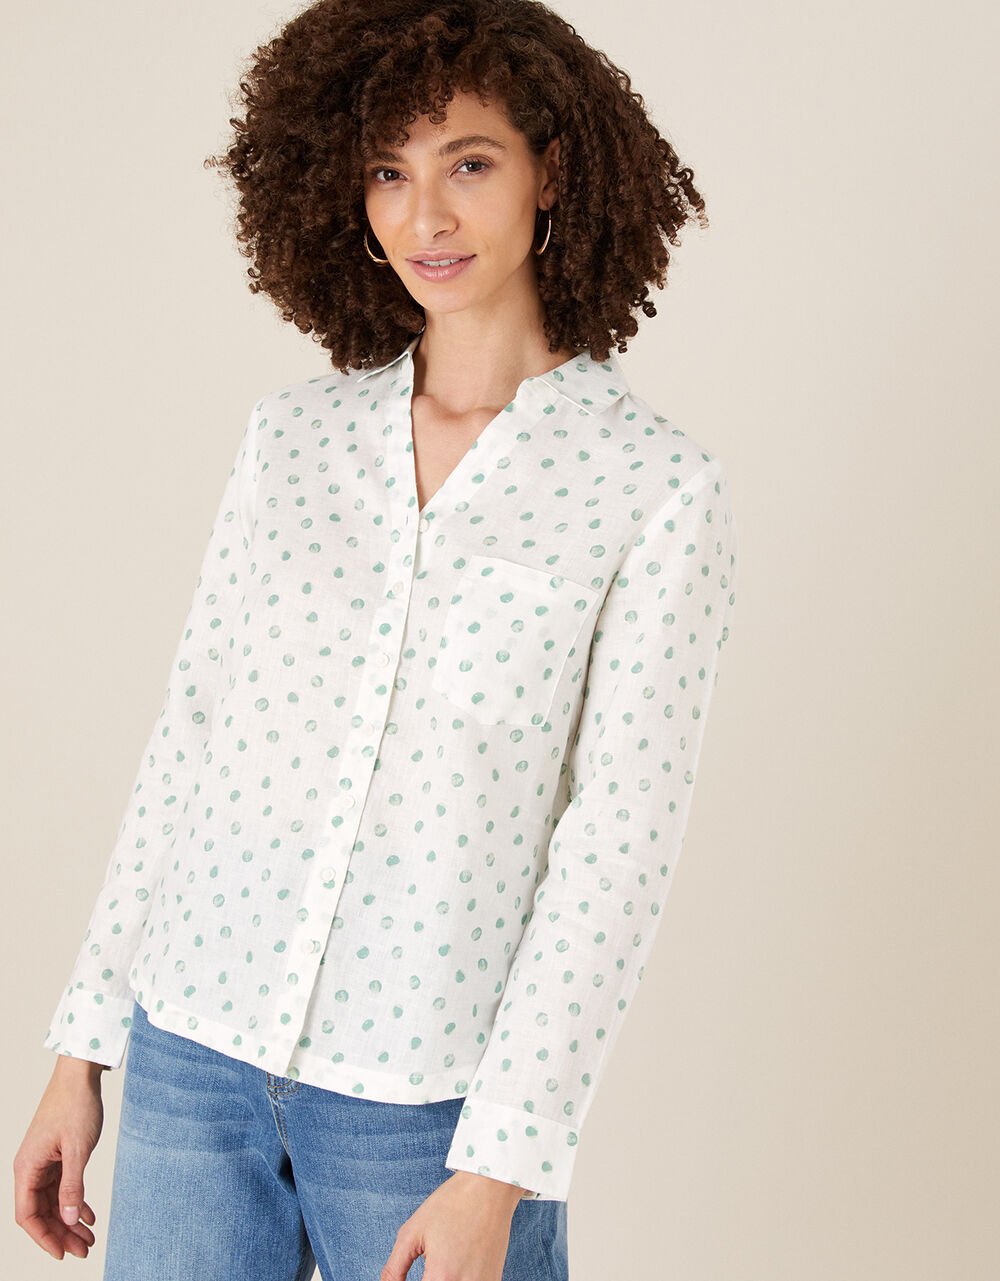 Women Women's Clothing | Patsy Spot Shirt in Pure Linen Ivory - RL05598